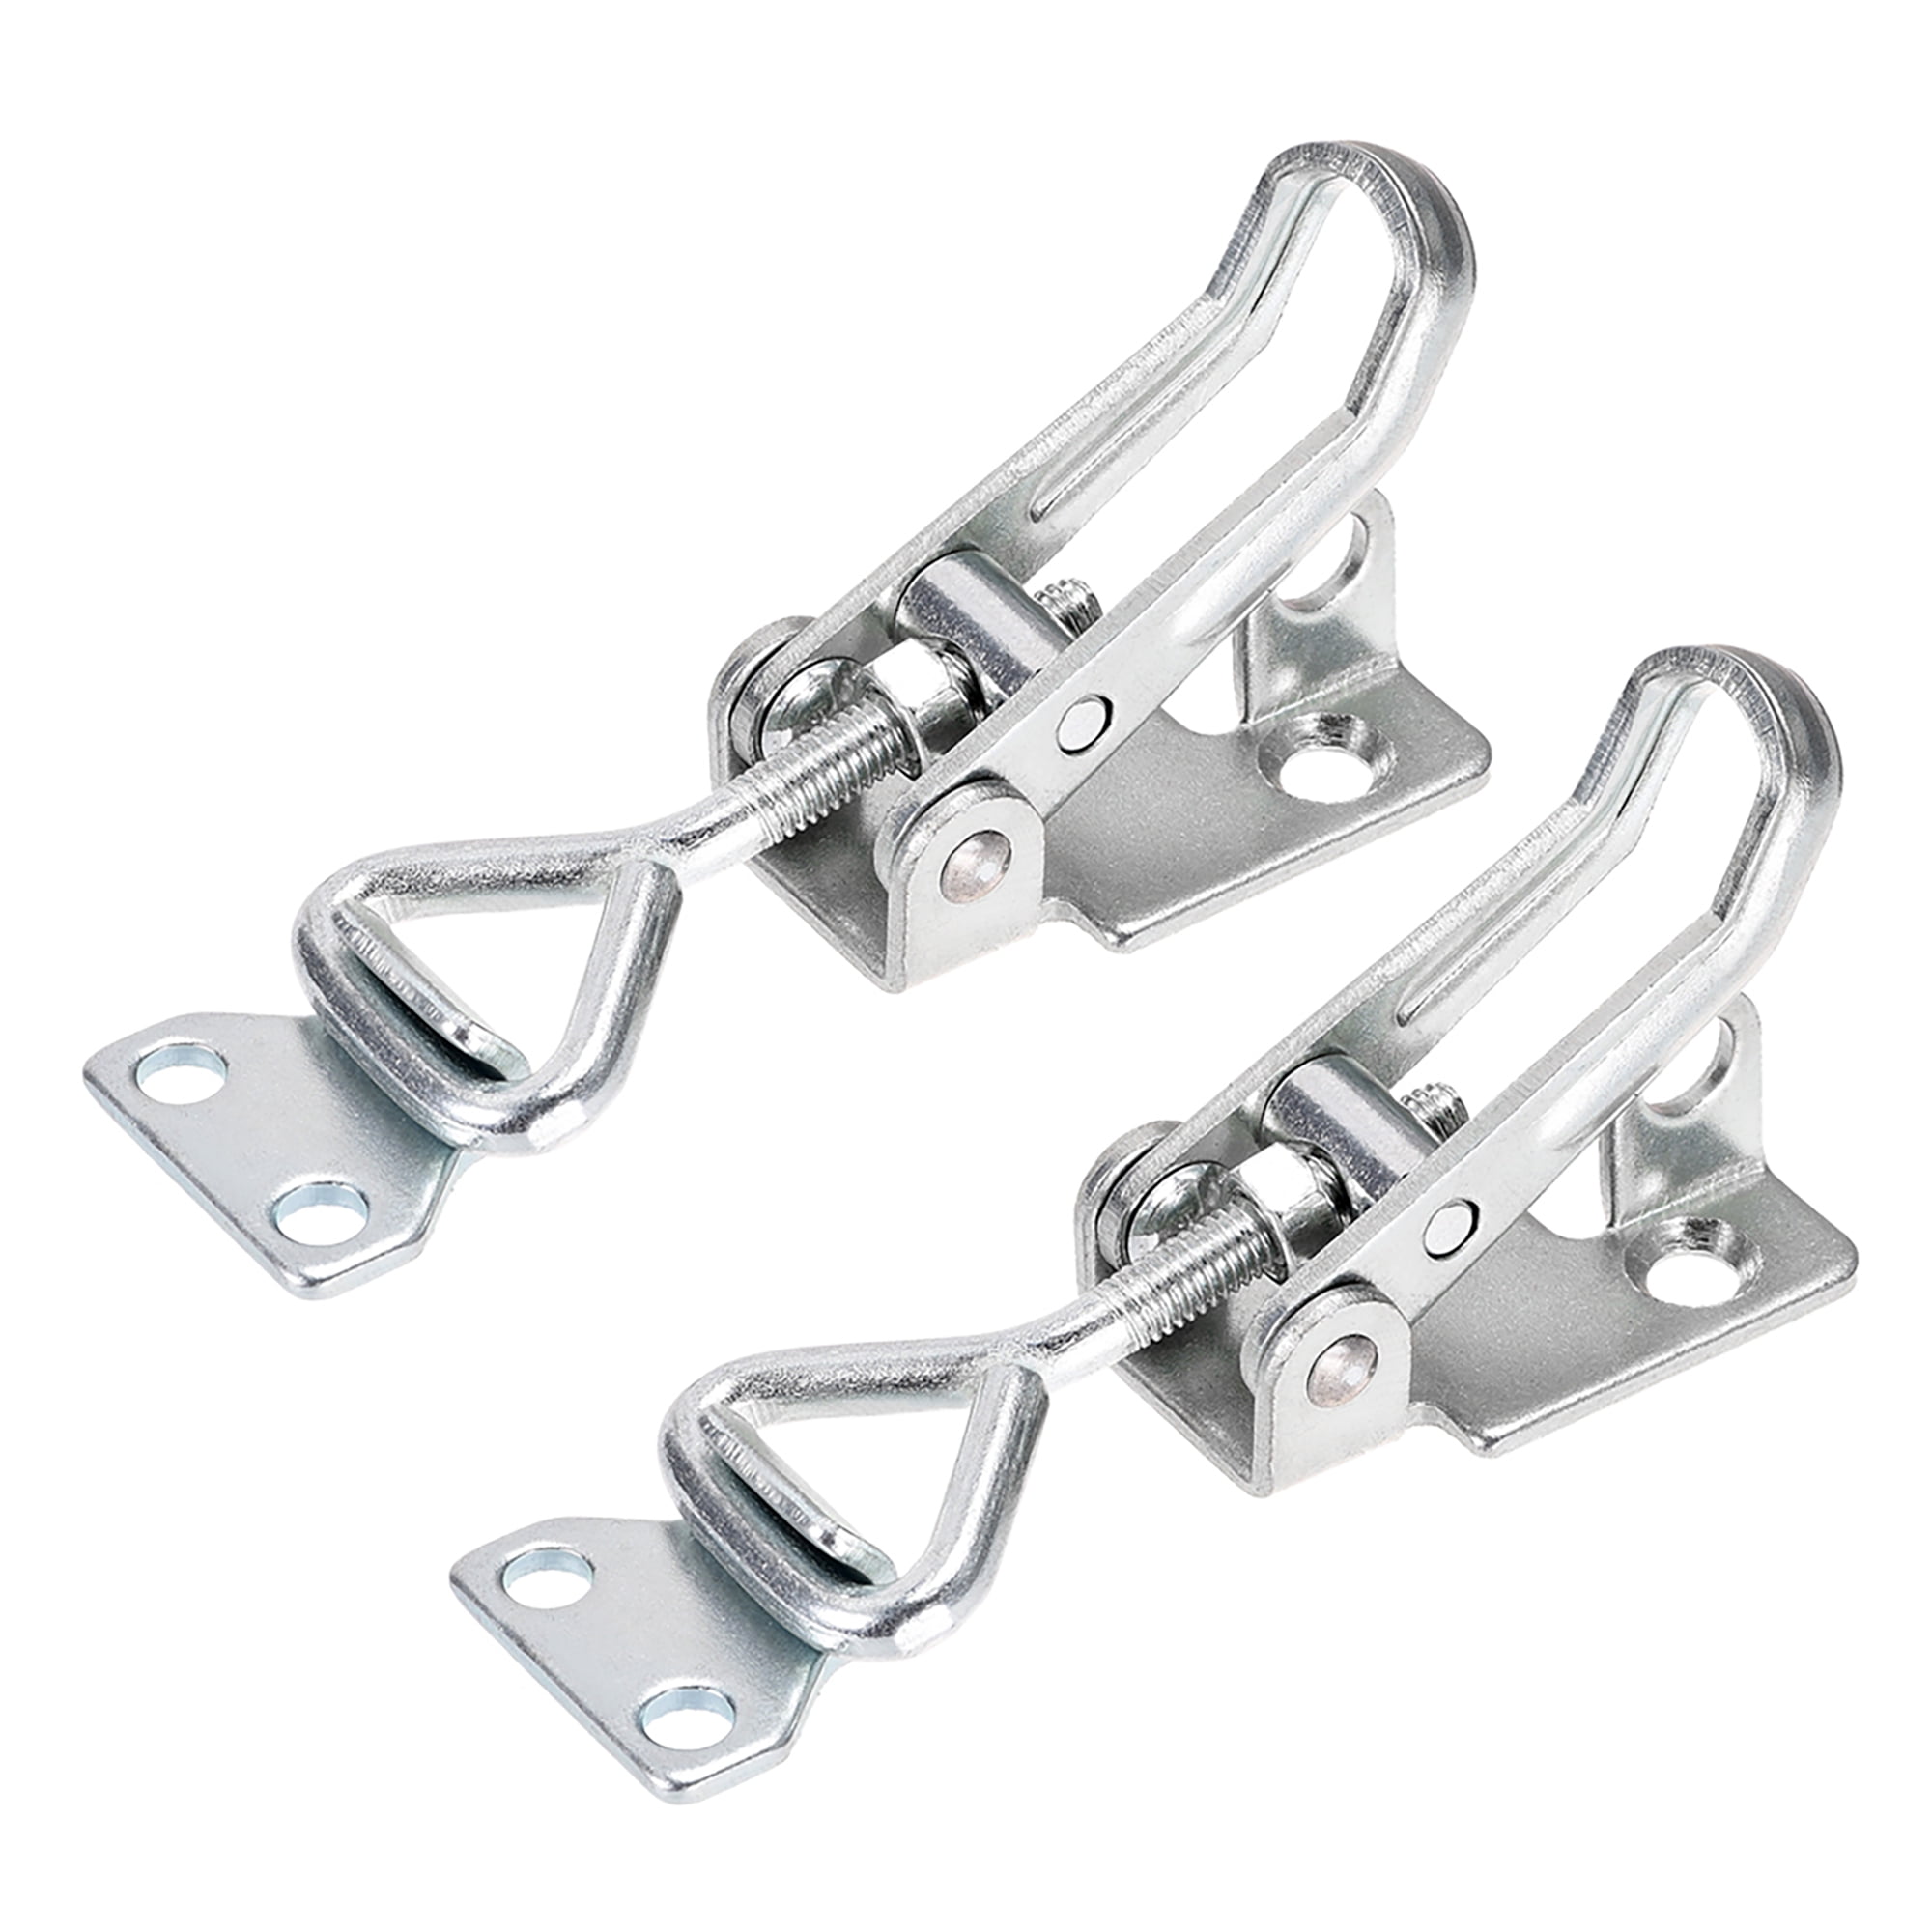 2 Pcs 1KN Locking Load Iron Pull-Action Latch Adjustable Toggle Clamp w Keyhole 